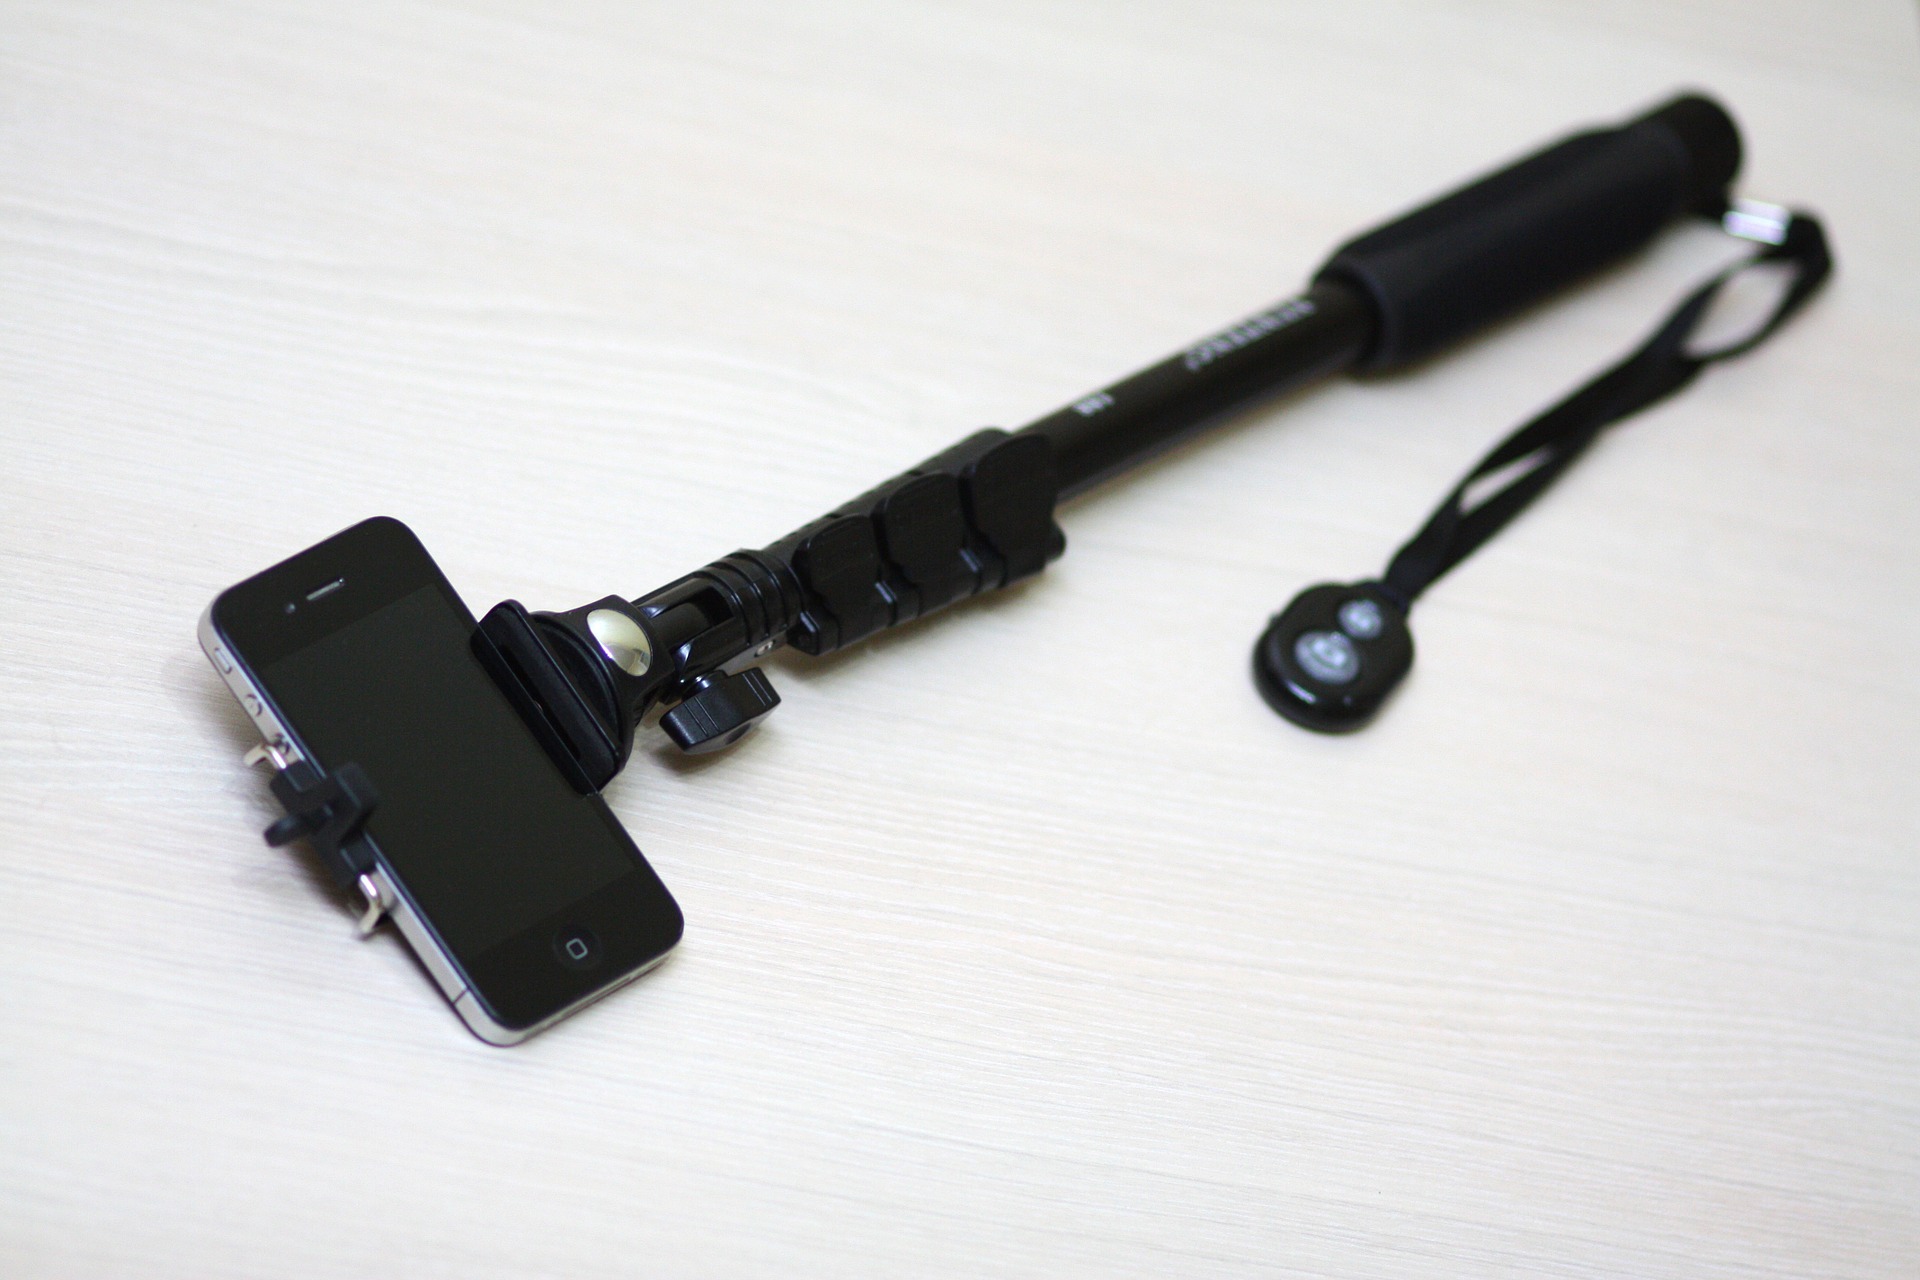 ATUMTEK Selfie Stick Tripod, Extendable 3 in 1 Aluminum Bluetooth Self, NOB